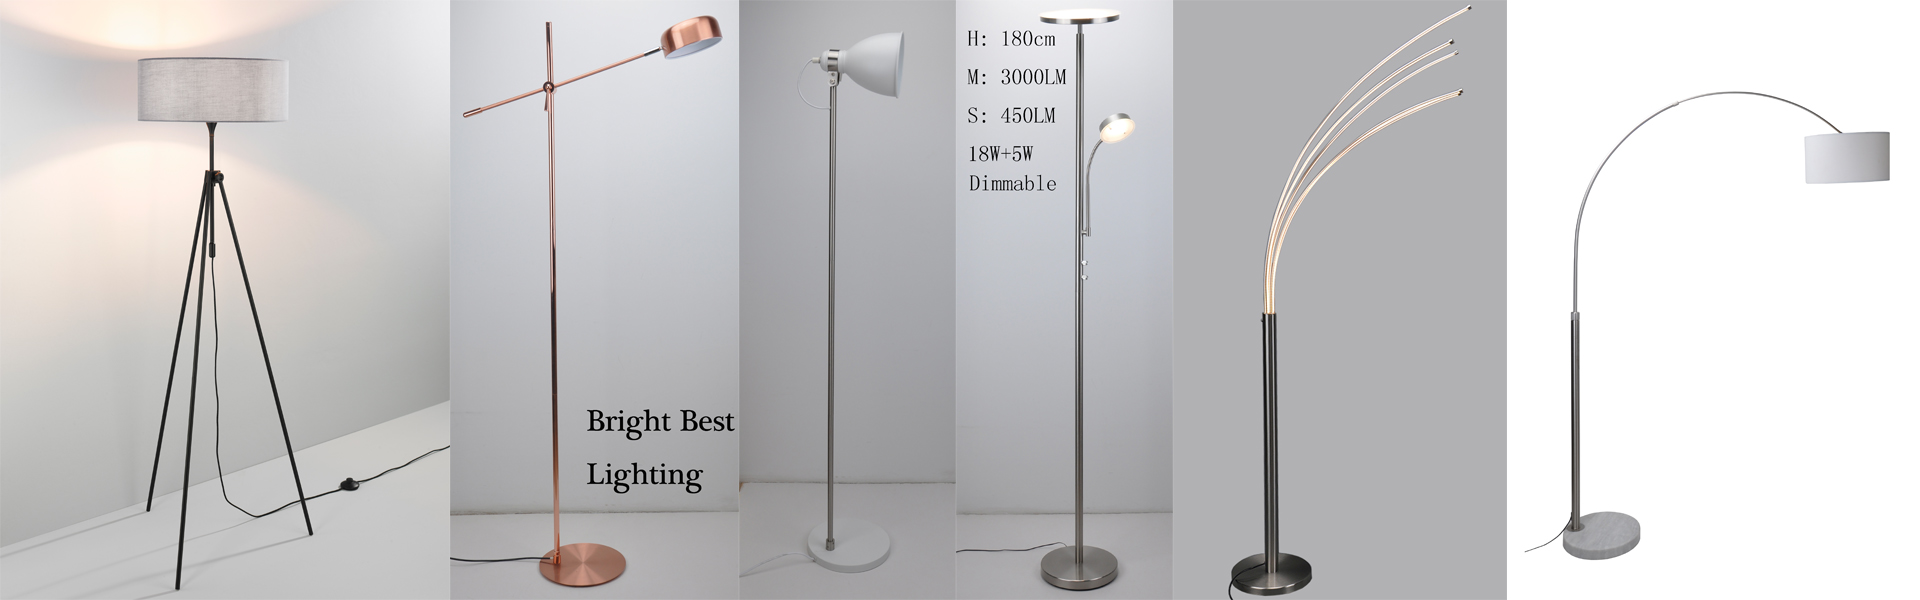 Dongguan Bright Best Lighting co., Ltd